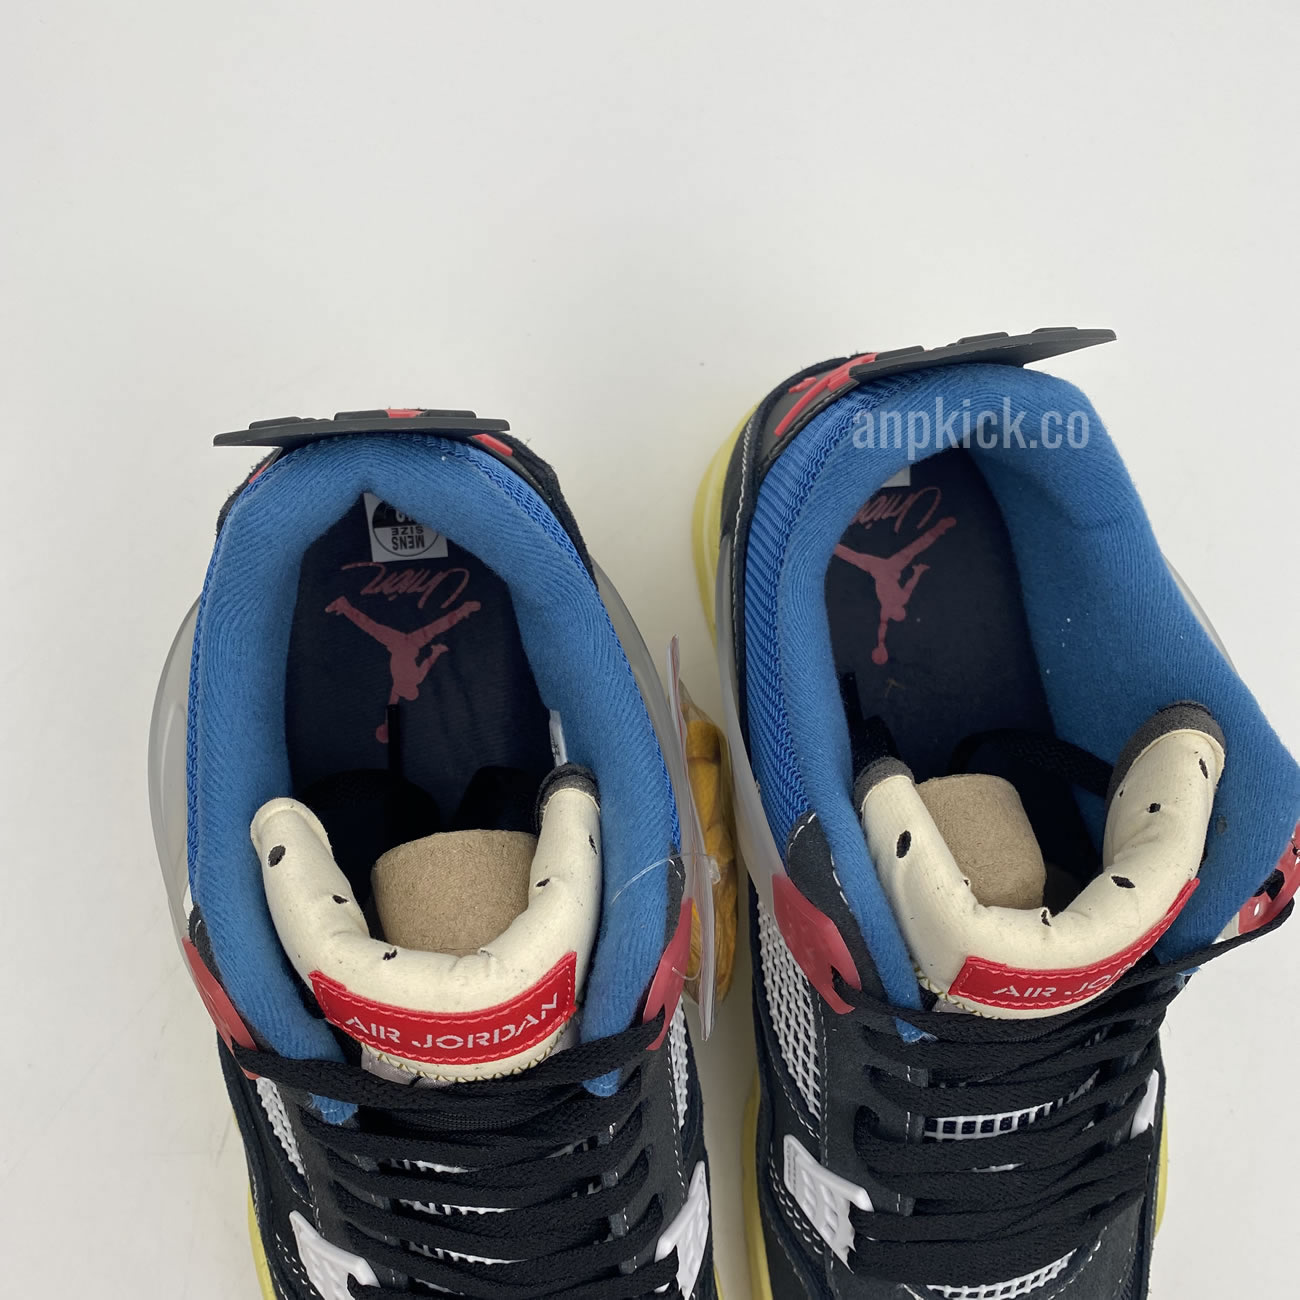 Nike x Union Air Jordan 4 Retro "Off Noir" DC9533-001 Release Date